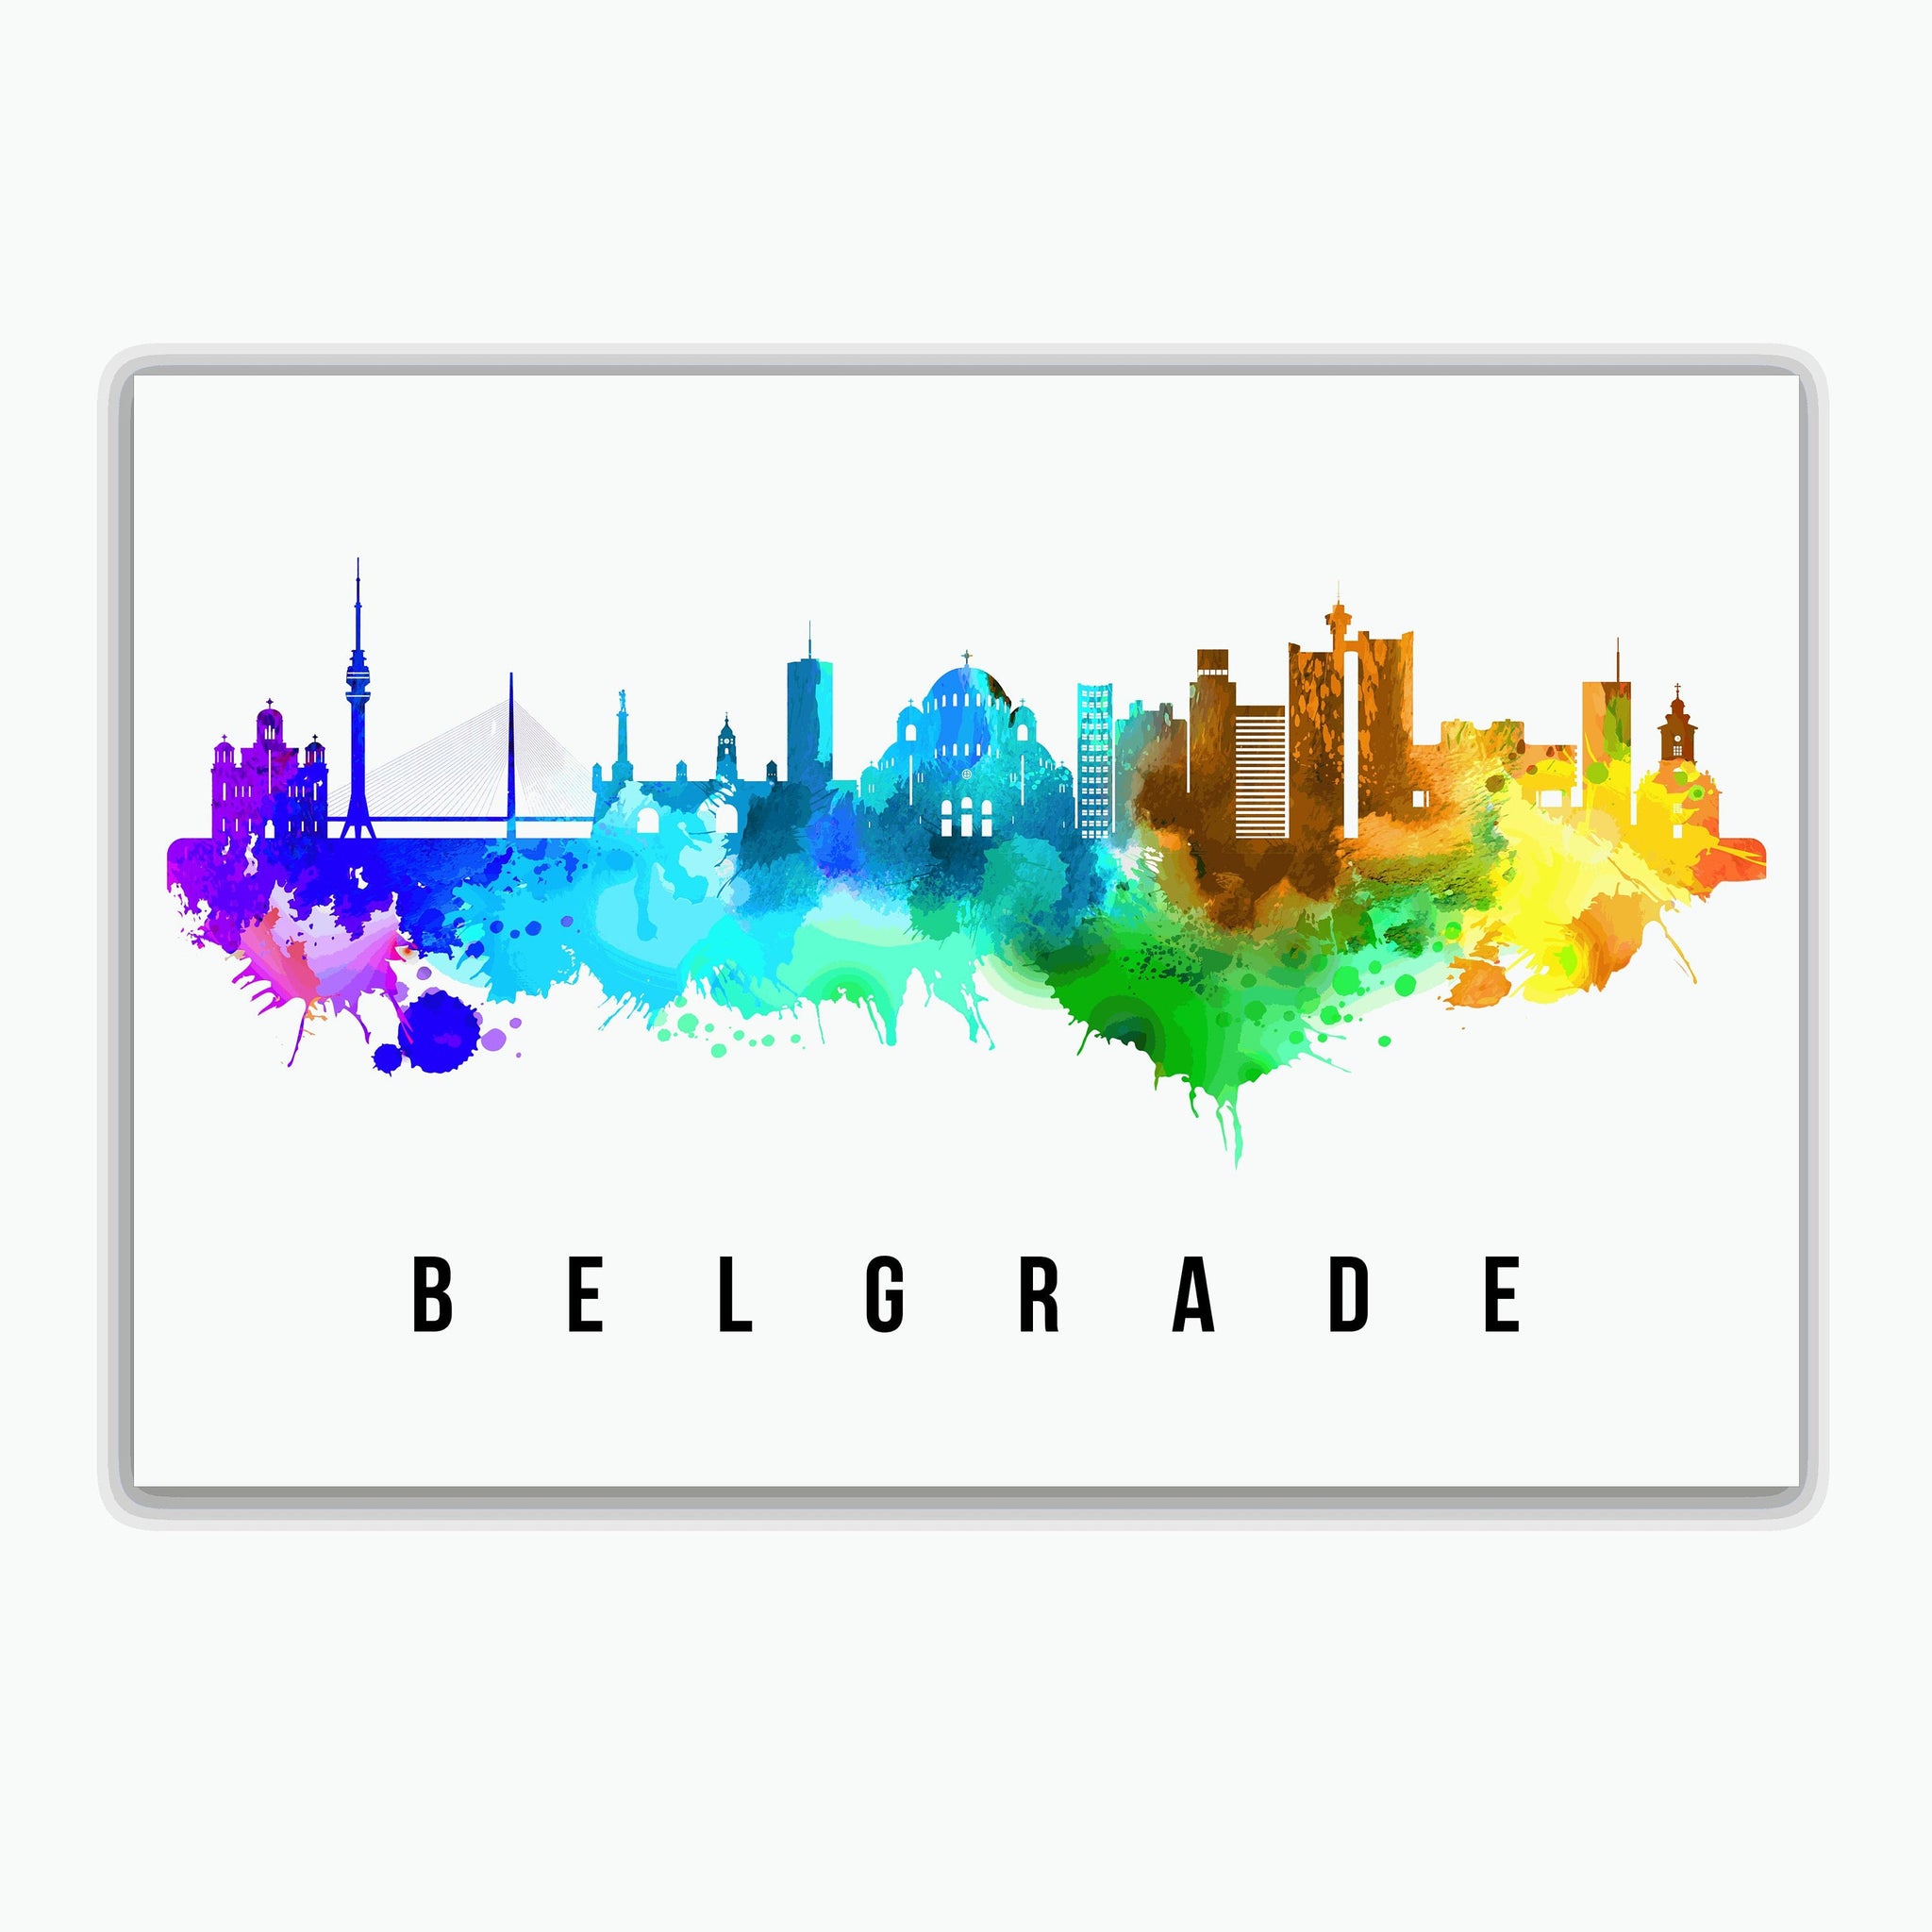 BELGRADE - SERBIA Poster, Skyline Poster Cityscape and Landmark Belgrade City Illustration Home Wall Art, Office Decor